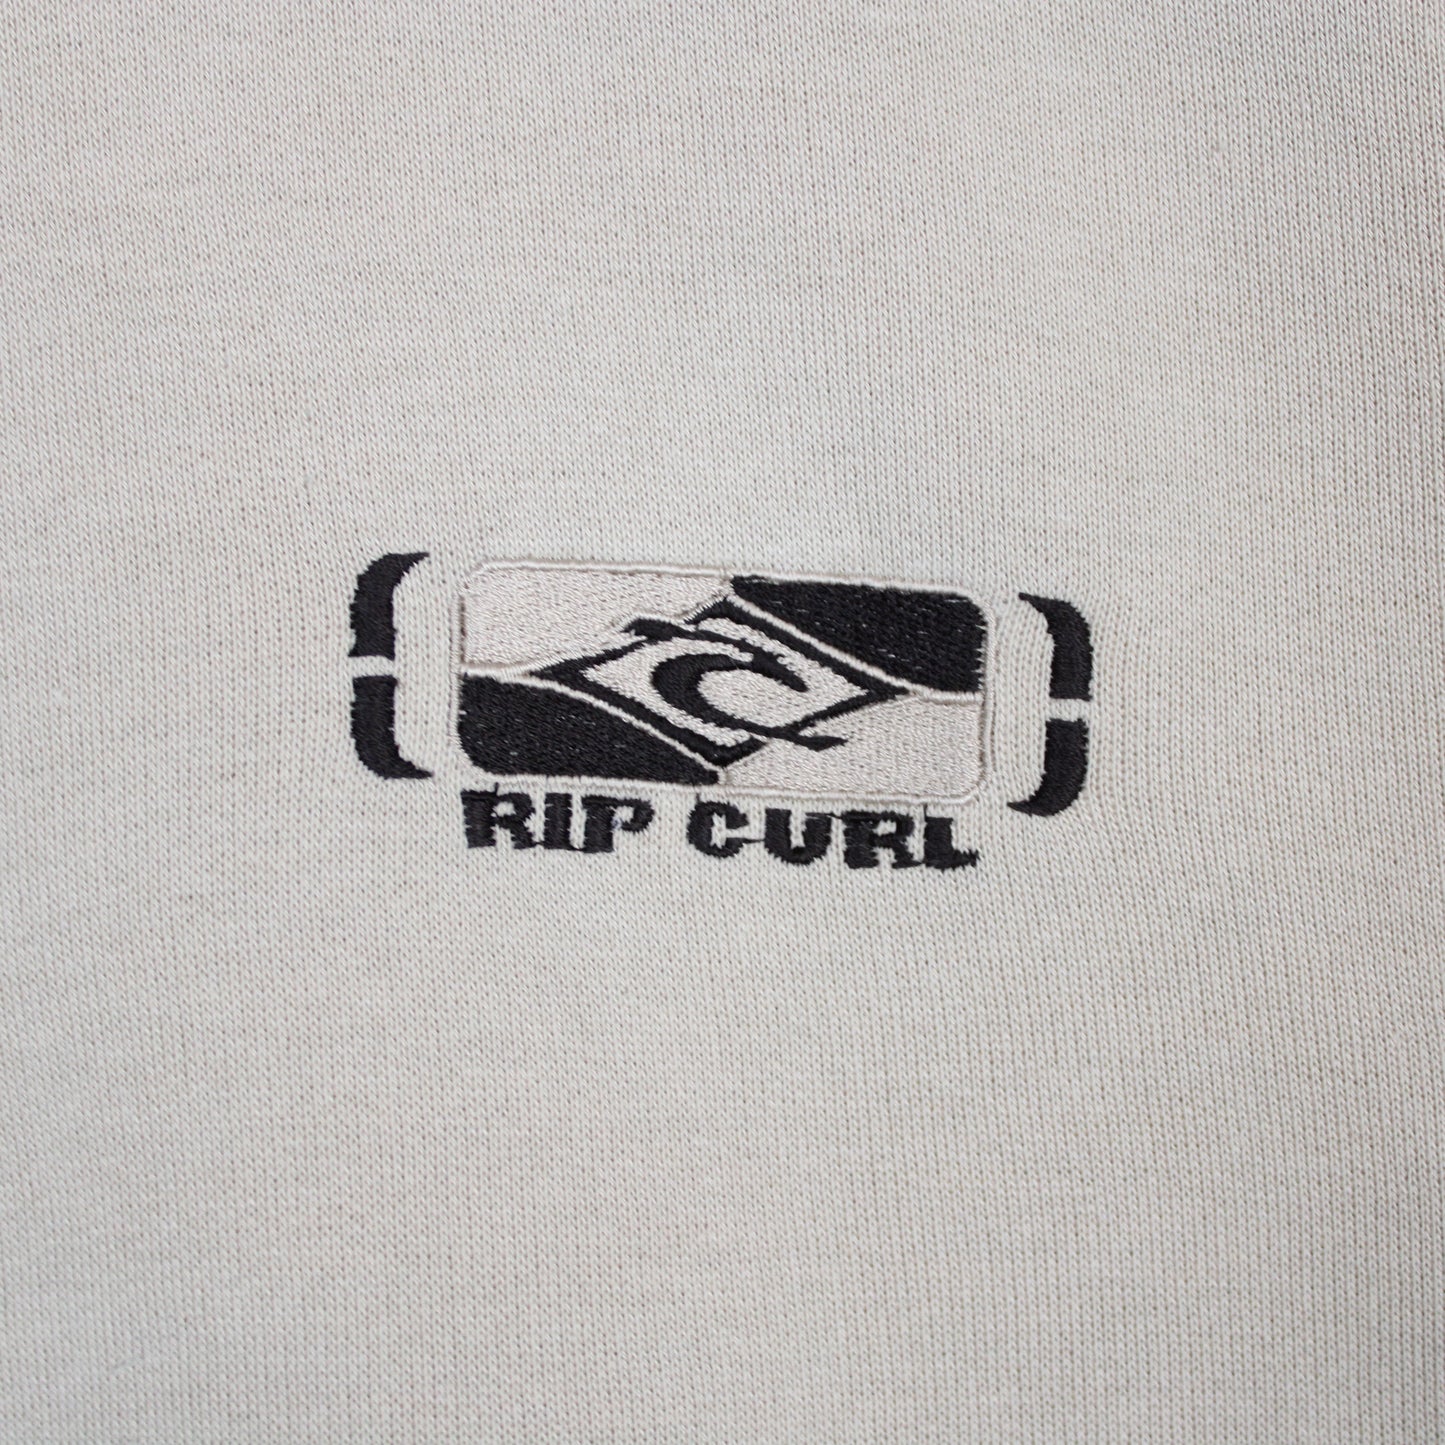 Vintage 90s Rip Curl Sweatshirt - XL